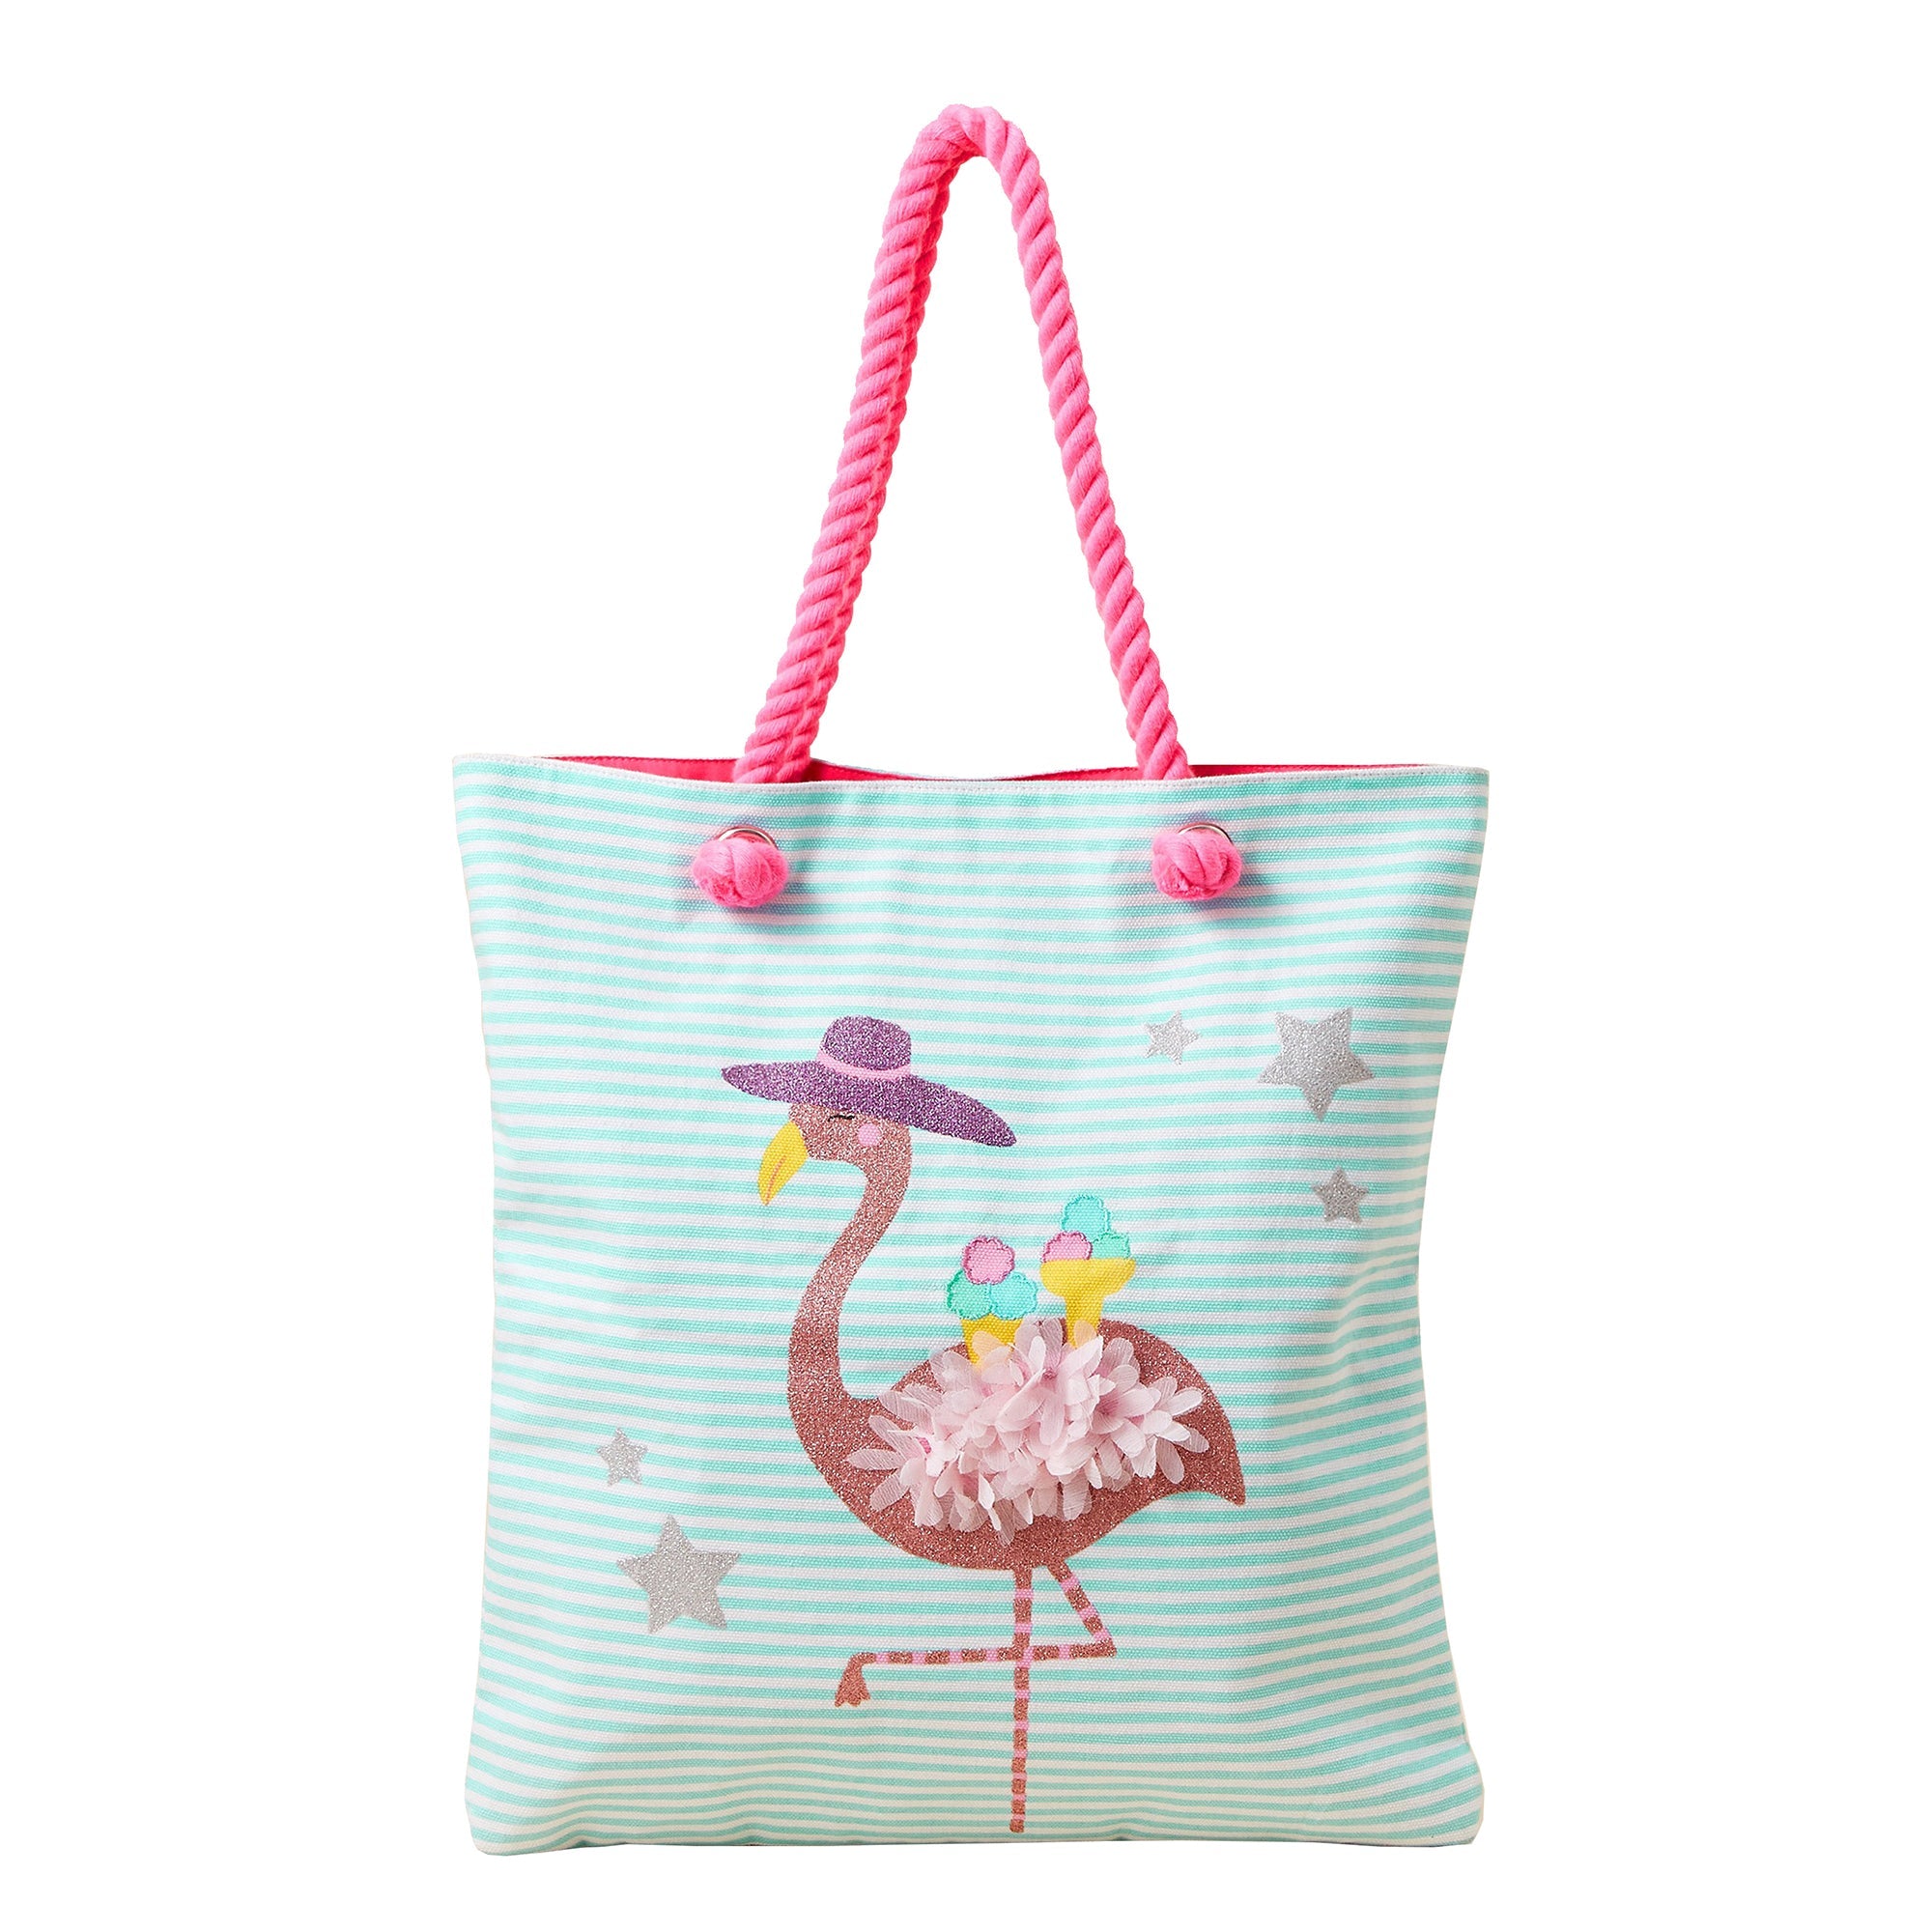 Accessorize London Girl's Flamingo Shopper Bag